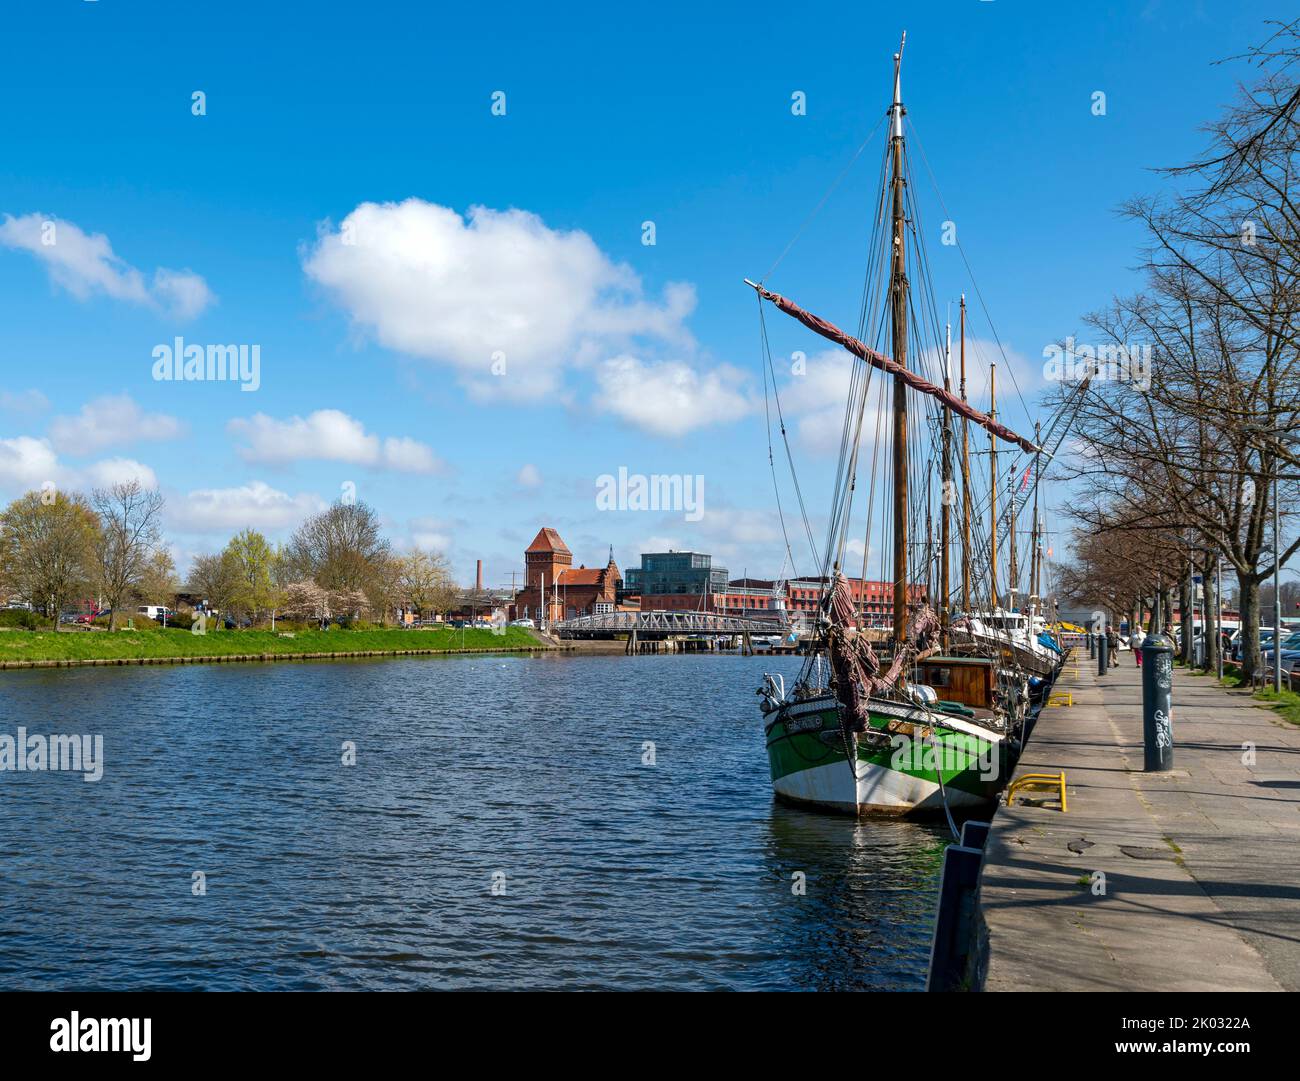 Segelschiff Mathilde, Frachtschiffe, Smackboot, Museumshafen, Stockfoto